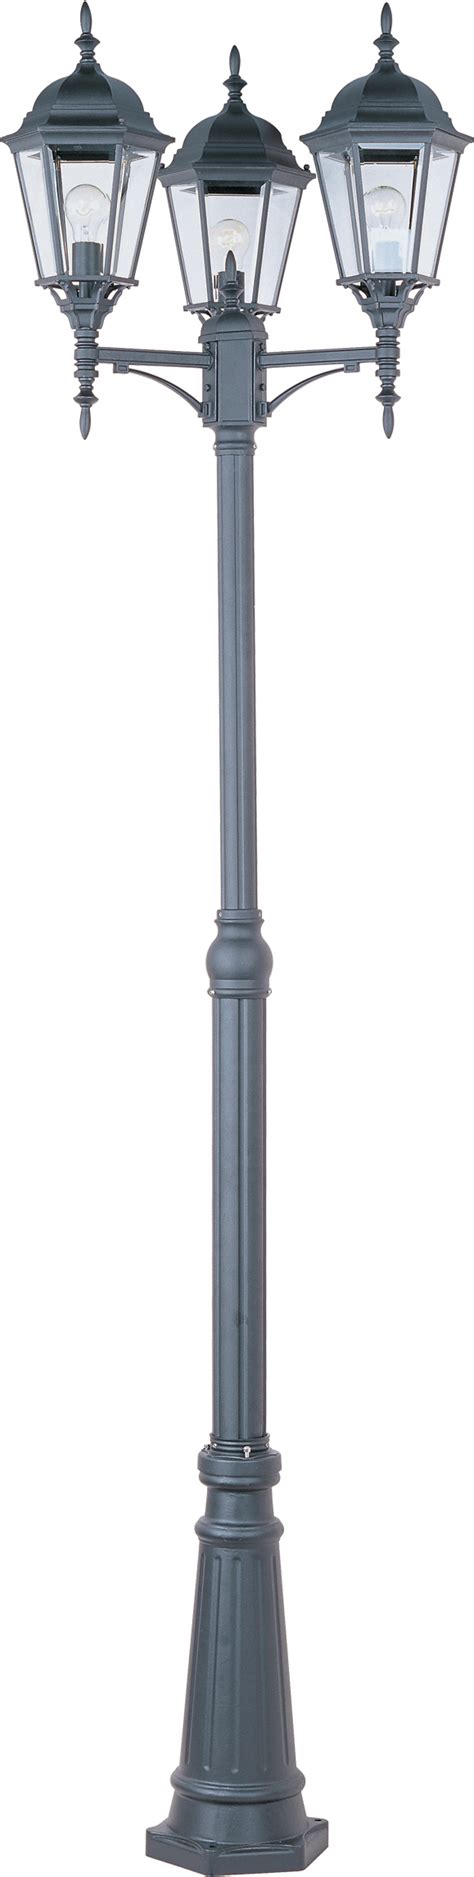 light outdoor polepost lantern outdoor maxim lighting